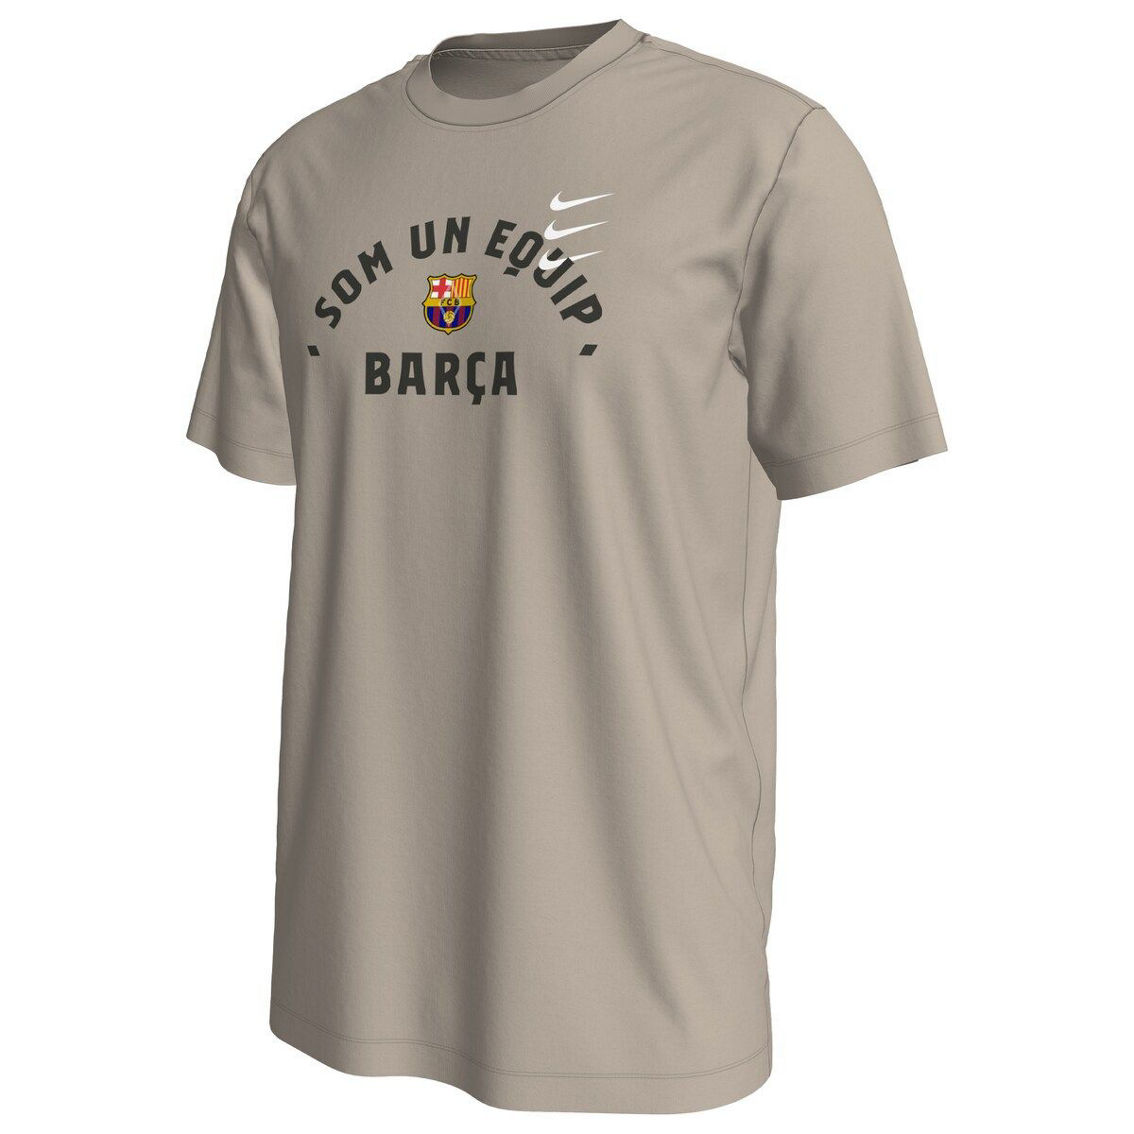 Nike Men's Tan Barcelona Verbiage T-Shirt - Image 3 of 4